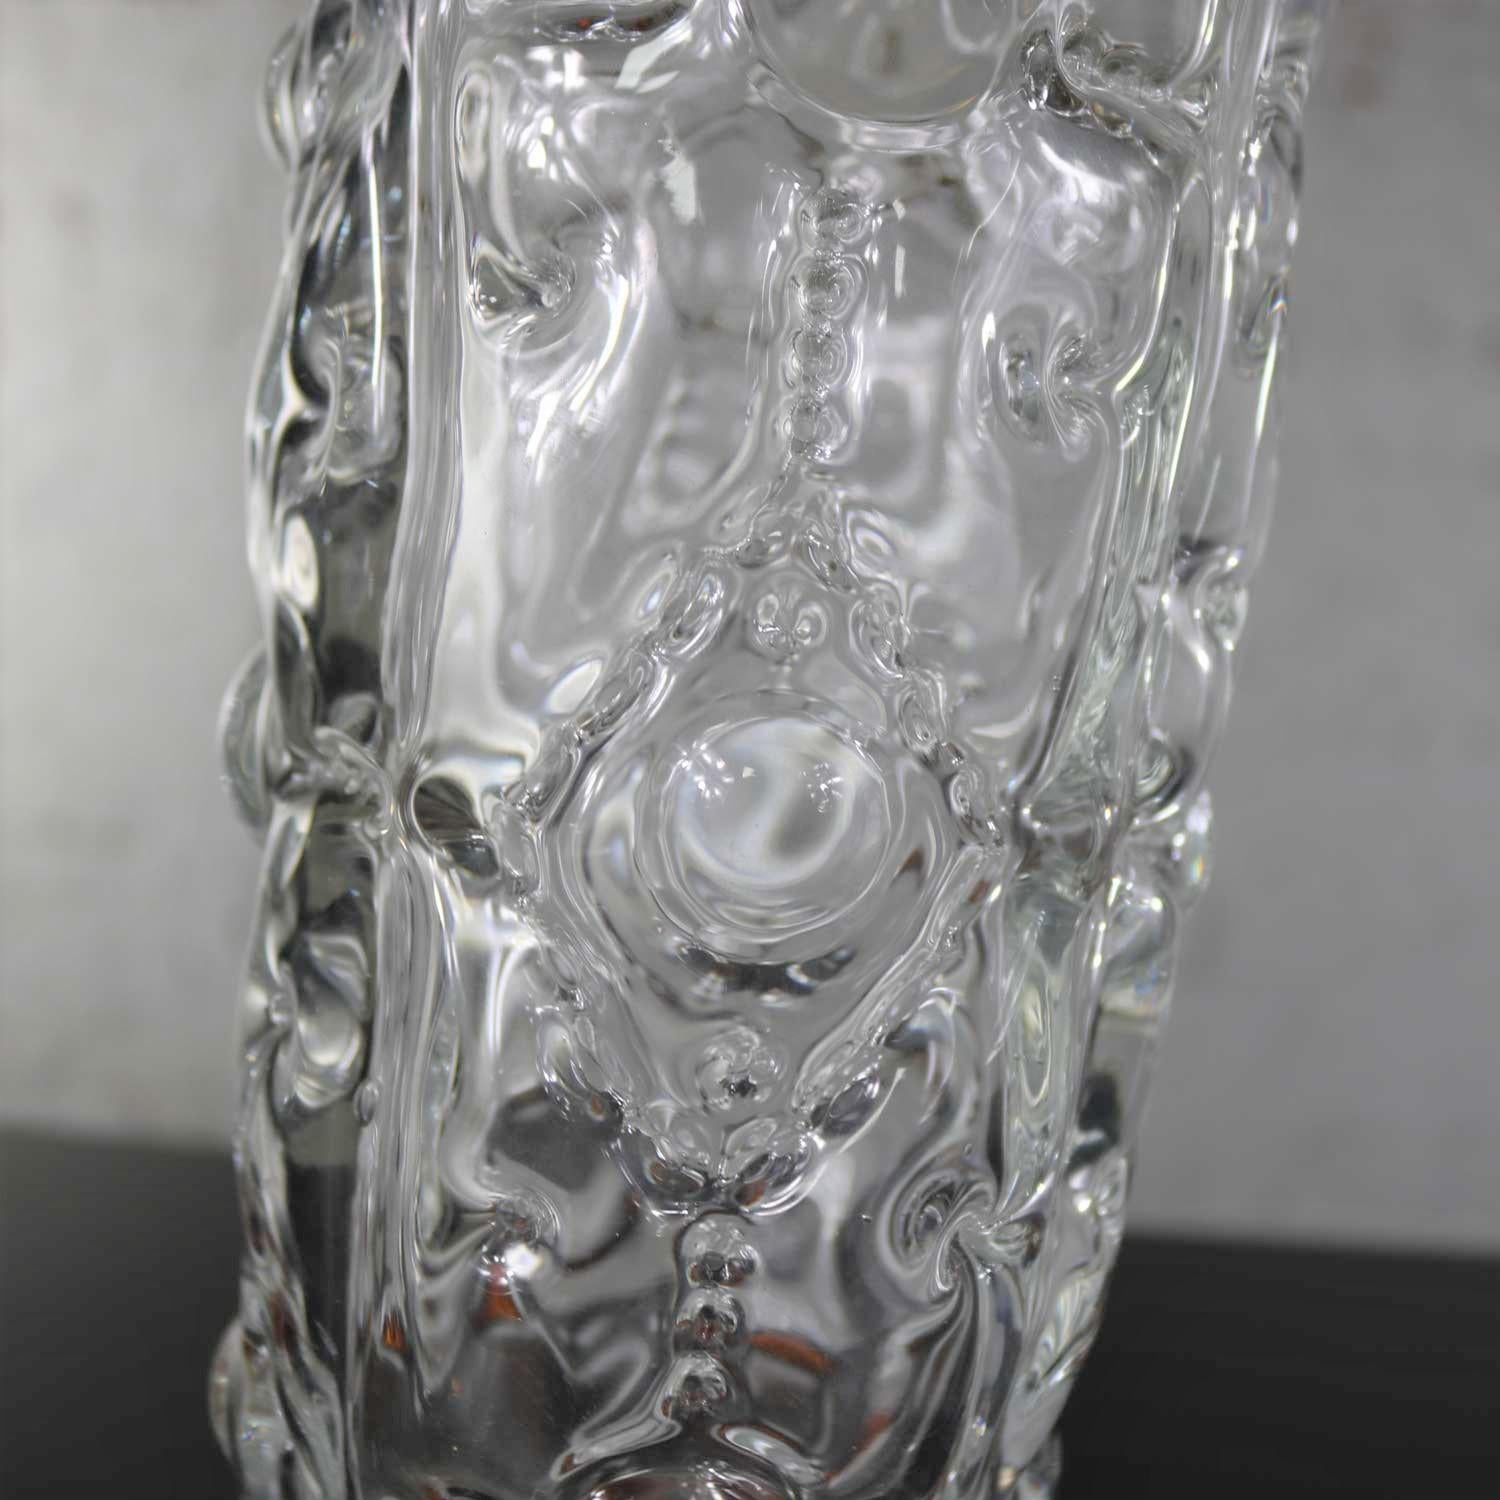 Blenko Hand Blown Glass Vase #9426 in Crystal and Topaz by Hank Adams 3